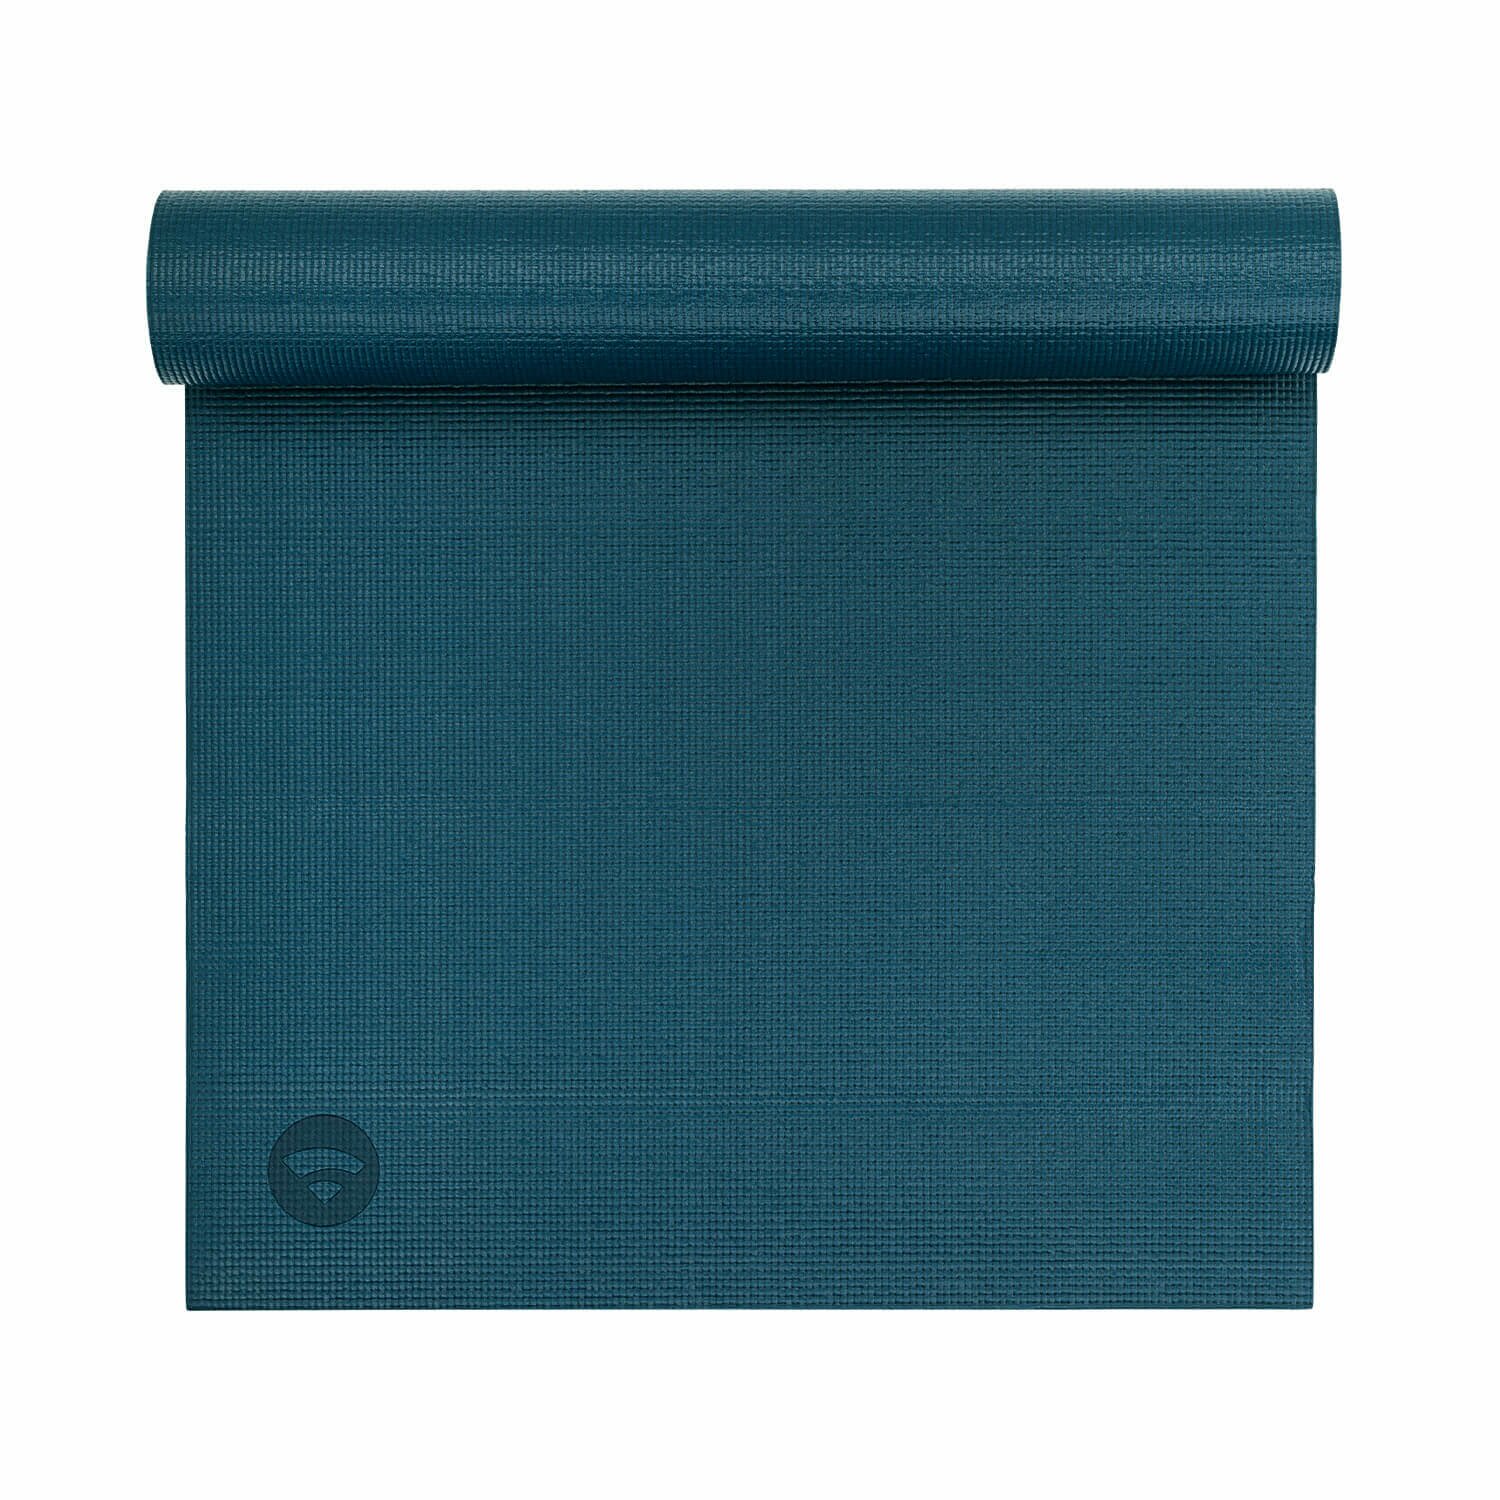 Tapete de yoga Asana - 4.5mm PVC ecológico 2